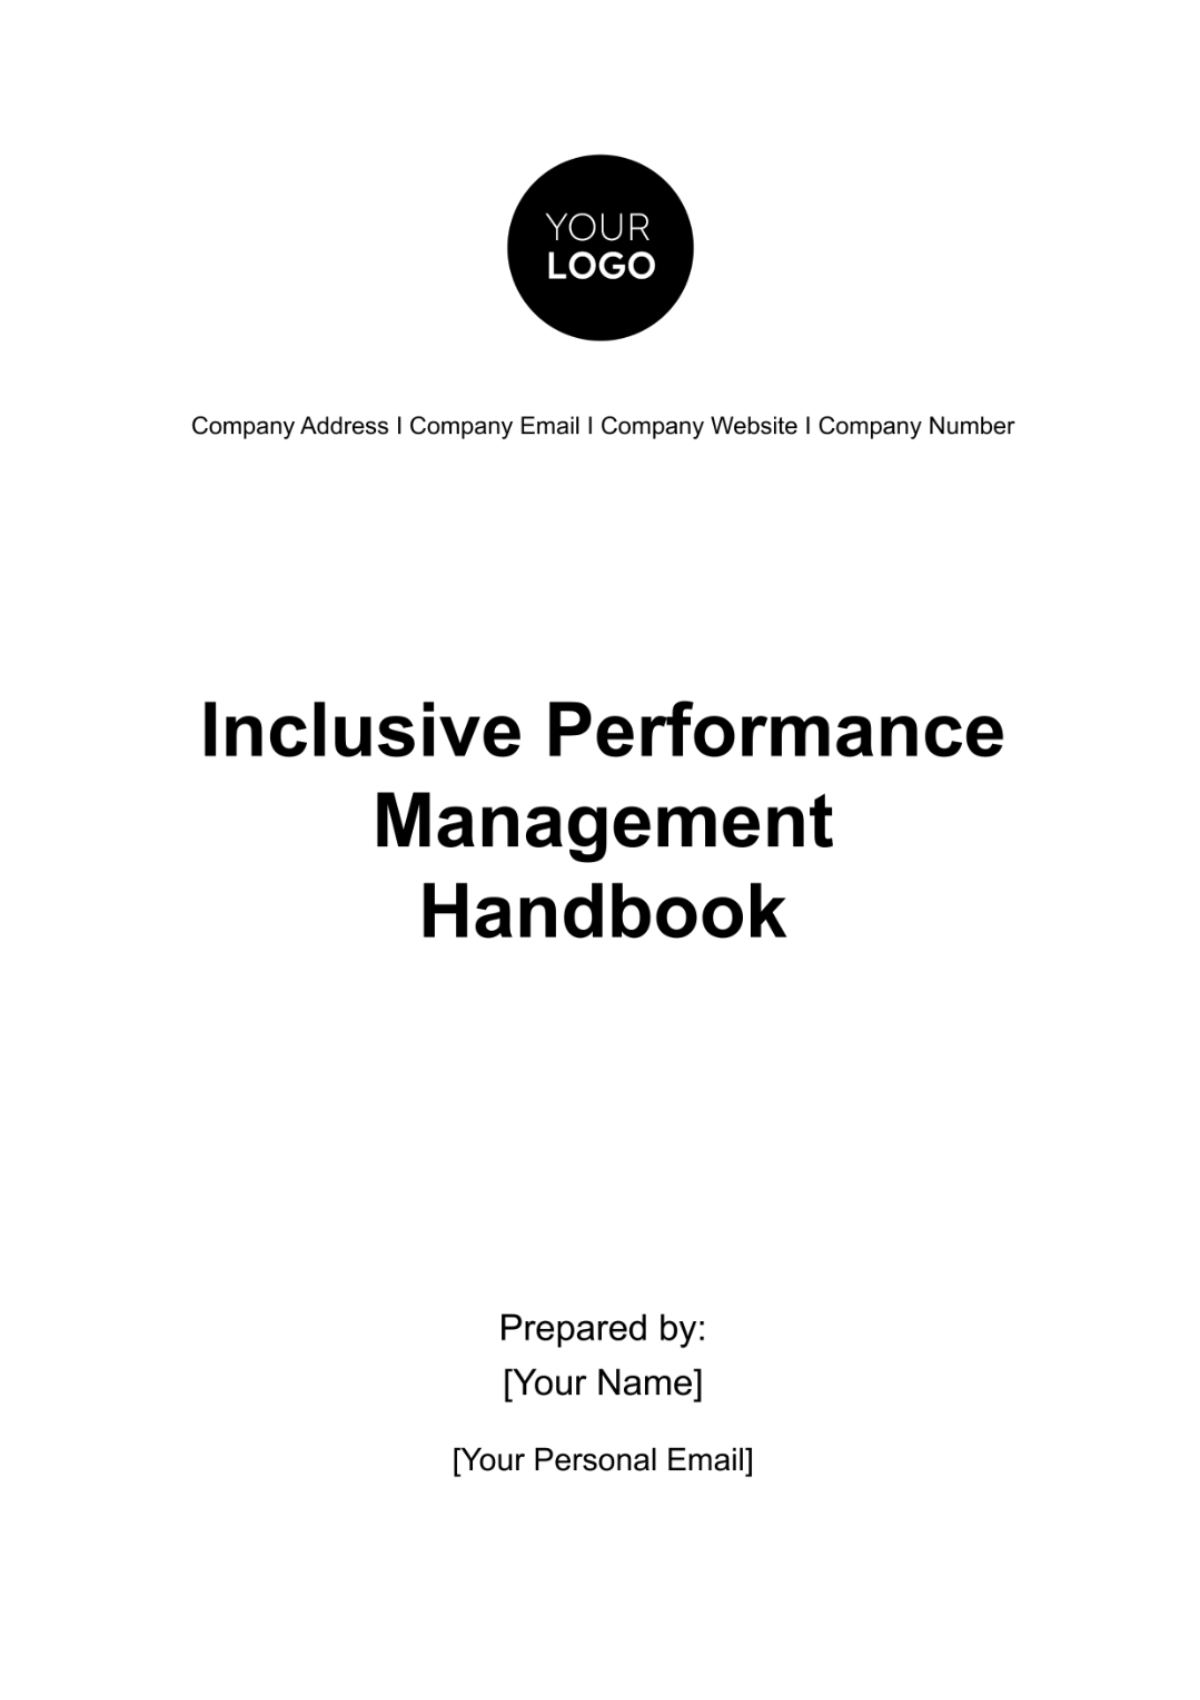 Free Inclusive Performance Management Handbook HR Template